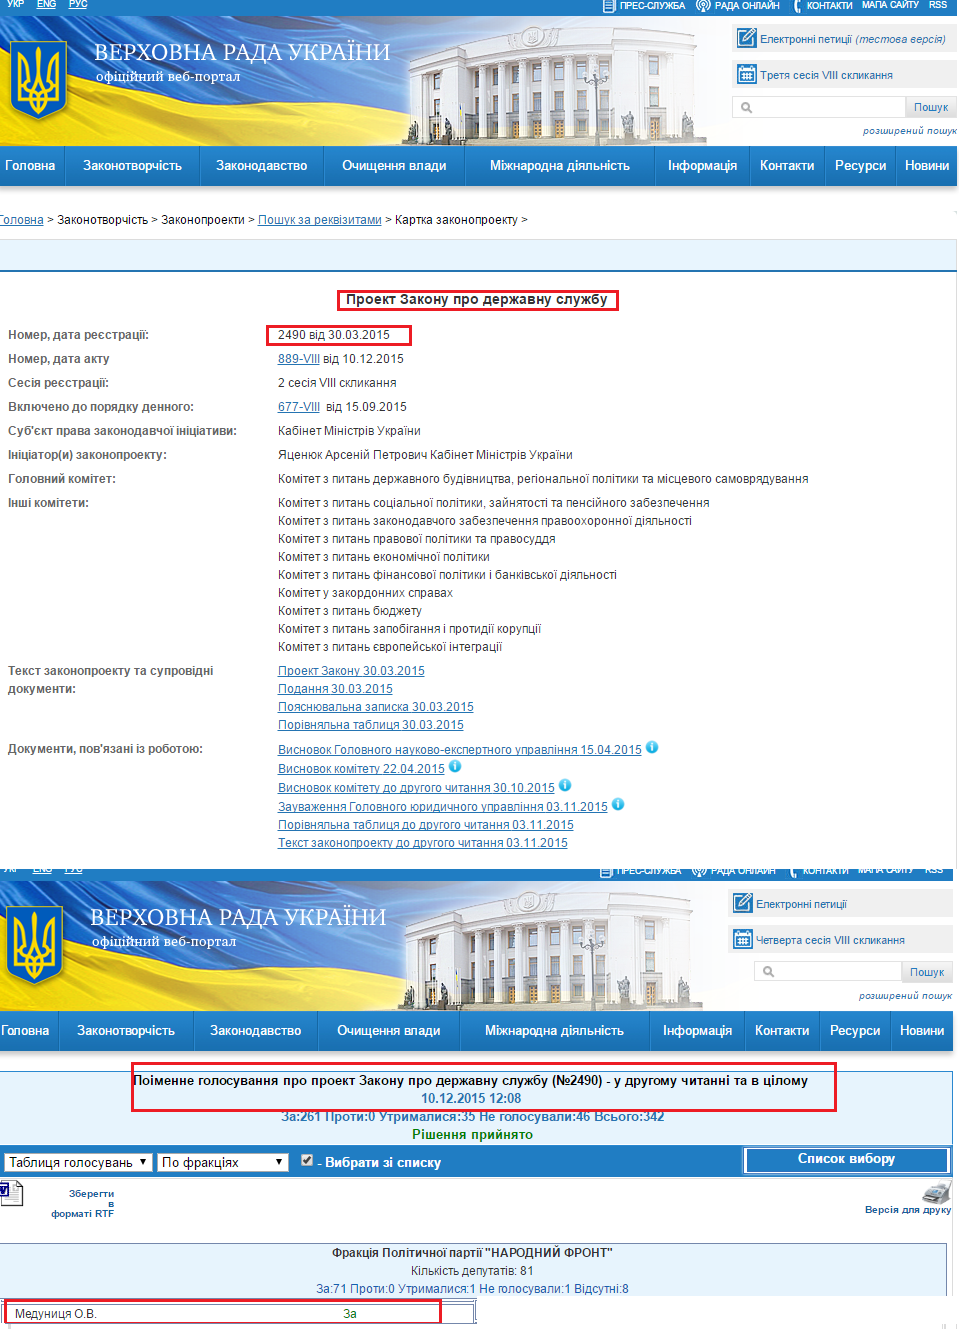 http://w1.c1.rada.gov.ua/pls/zweb2/webproc4_2?id=&pf3516=2490&skl=9